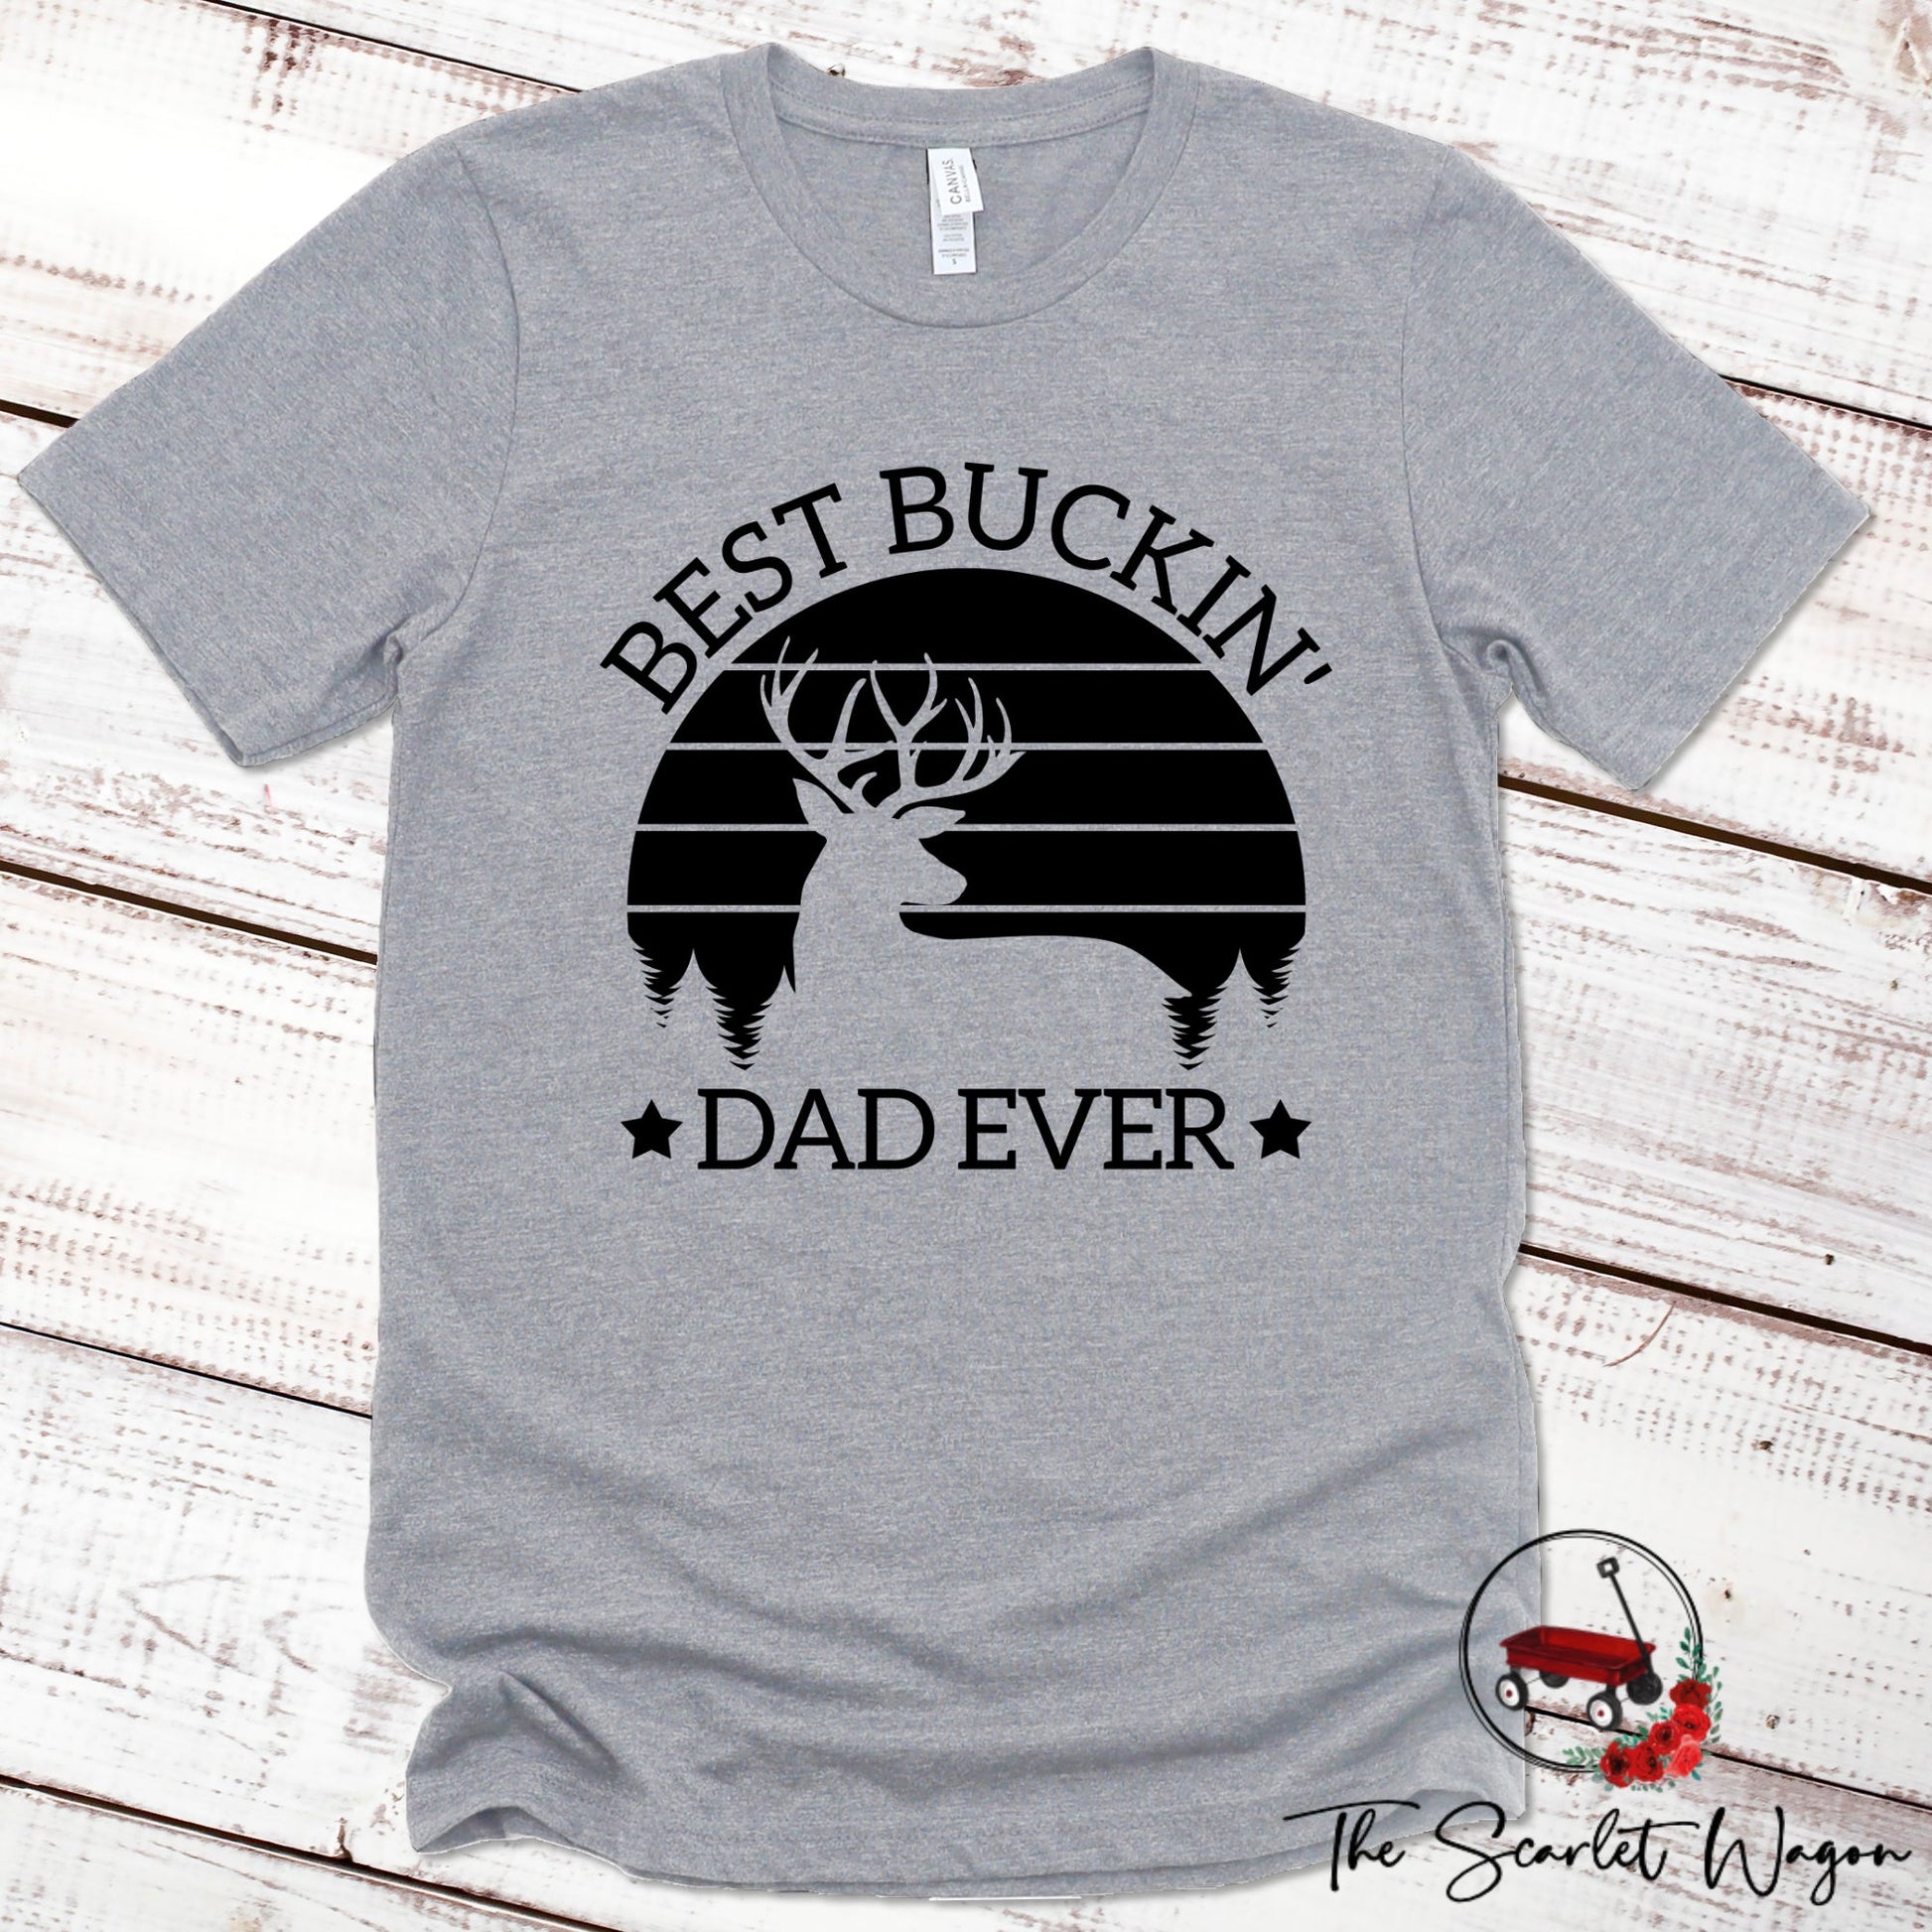 Best Buckin' Dad Ever Premium Tee Scarlet Wagon Athletic Heather XS 